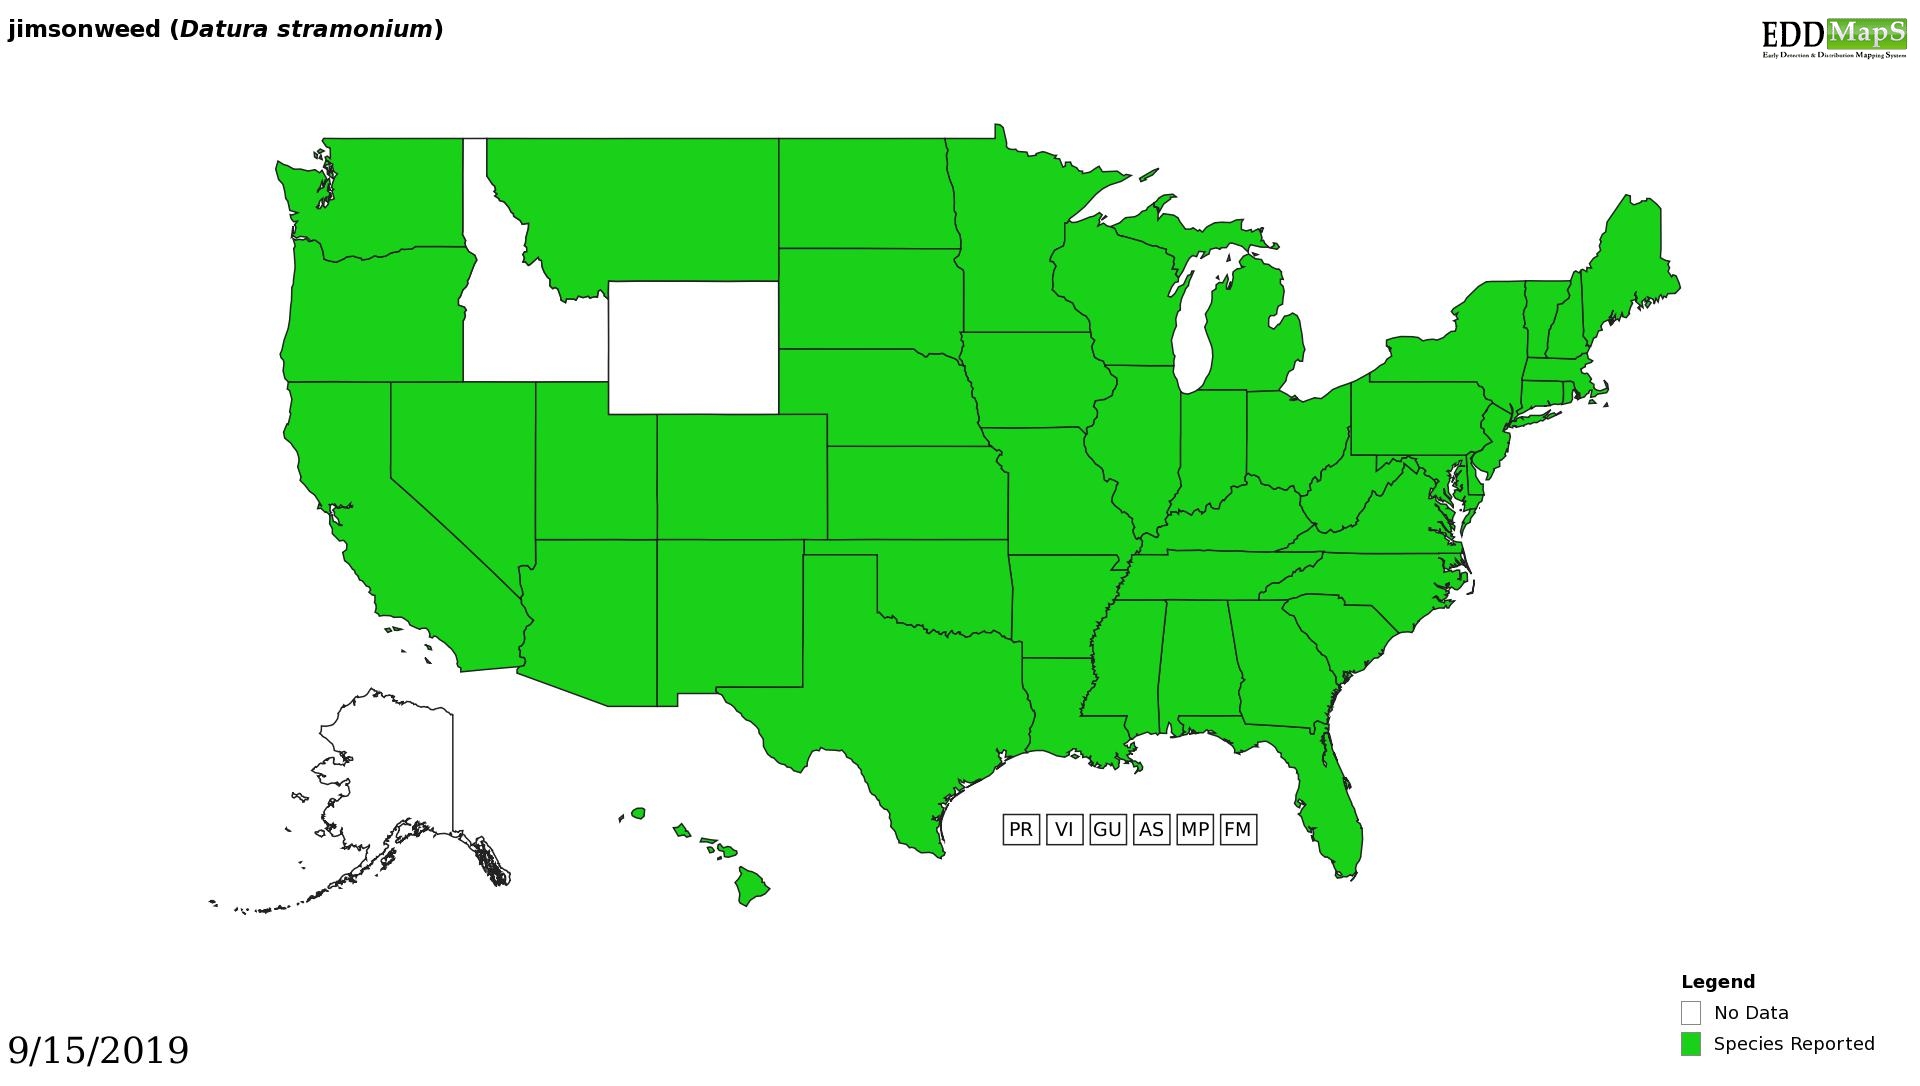 Jimsonweed distribution - United States